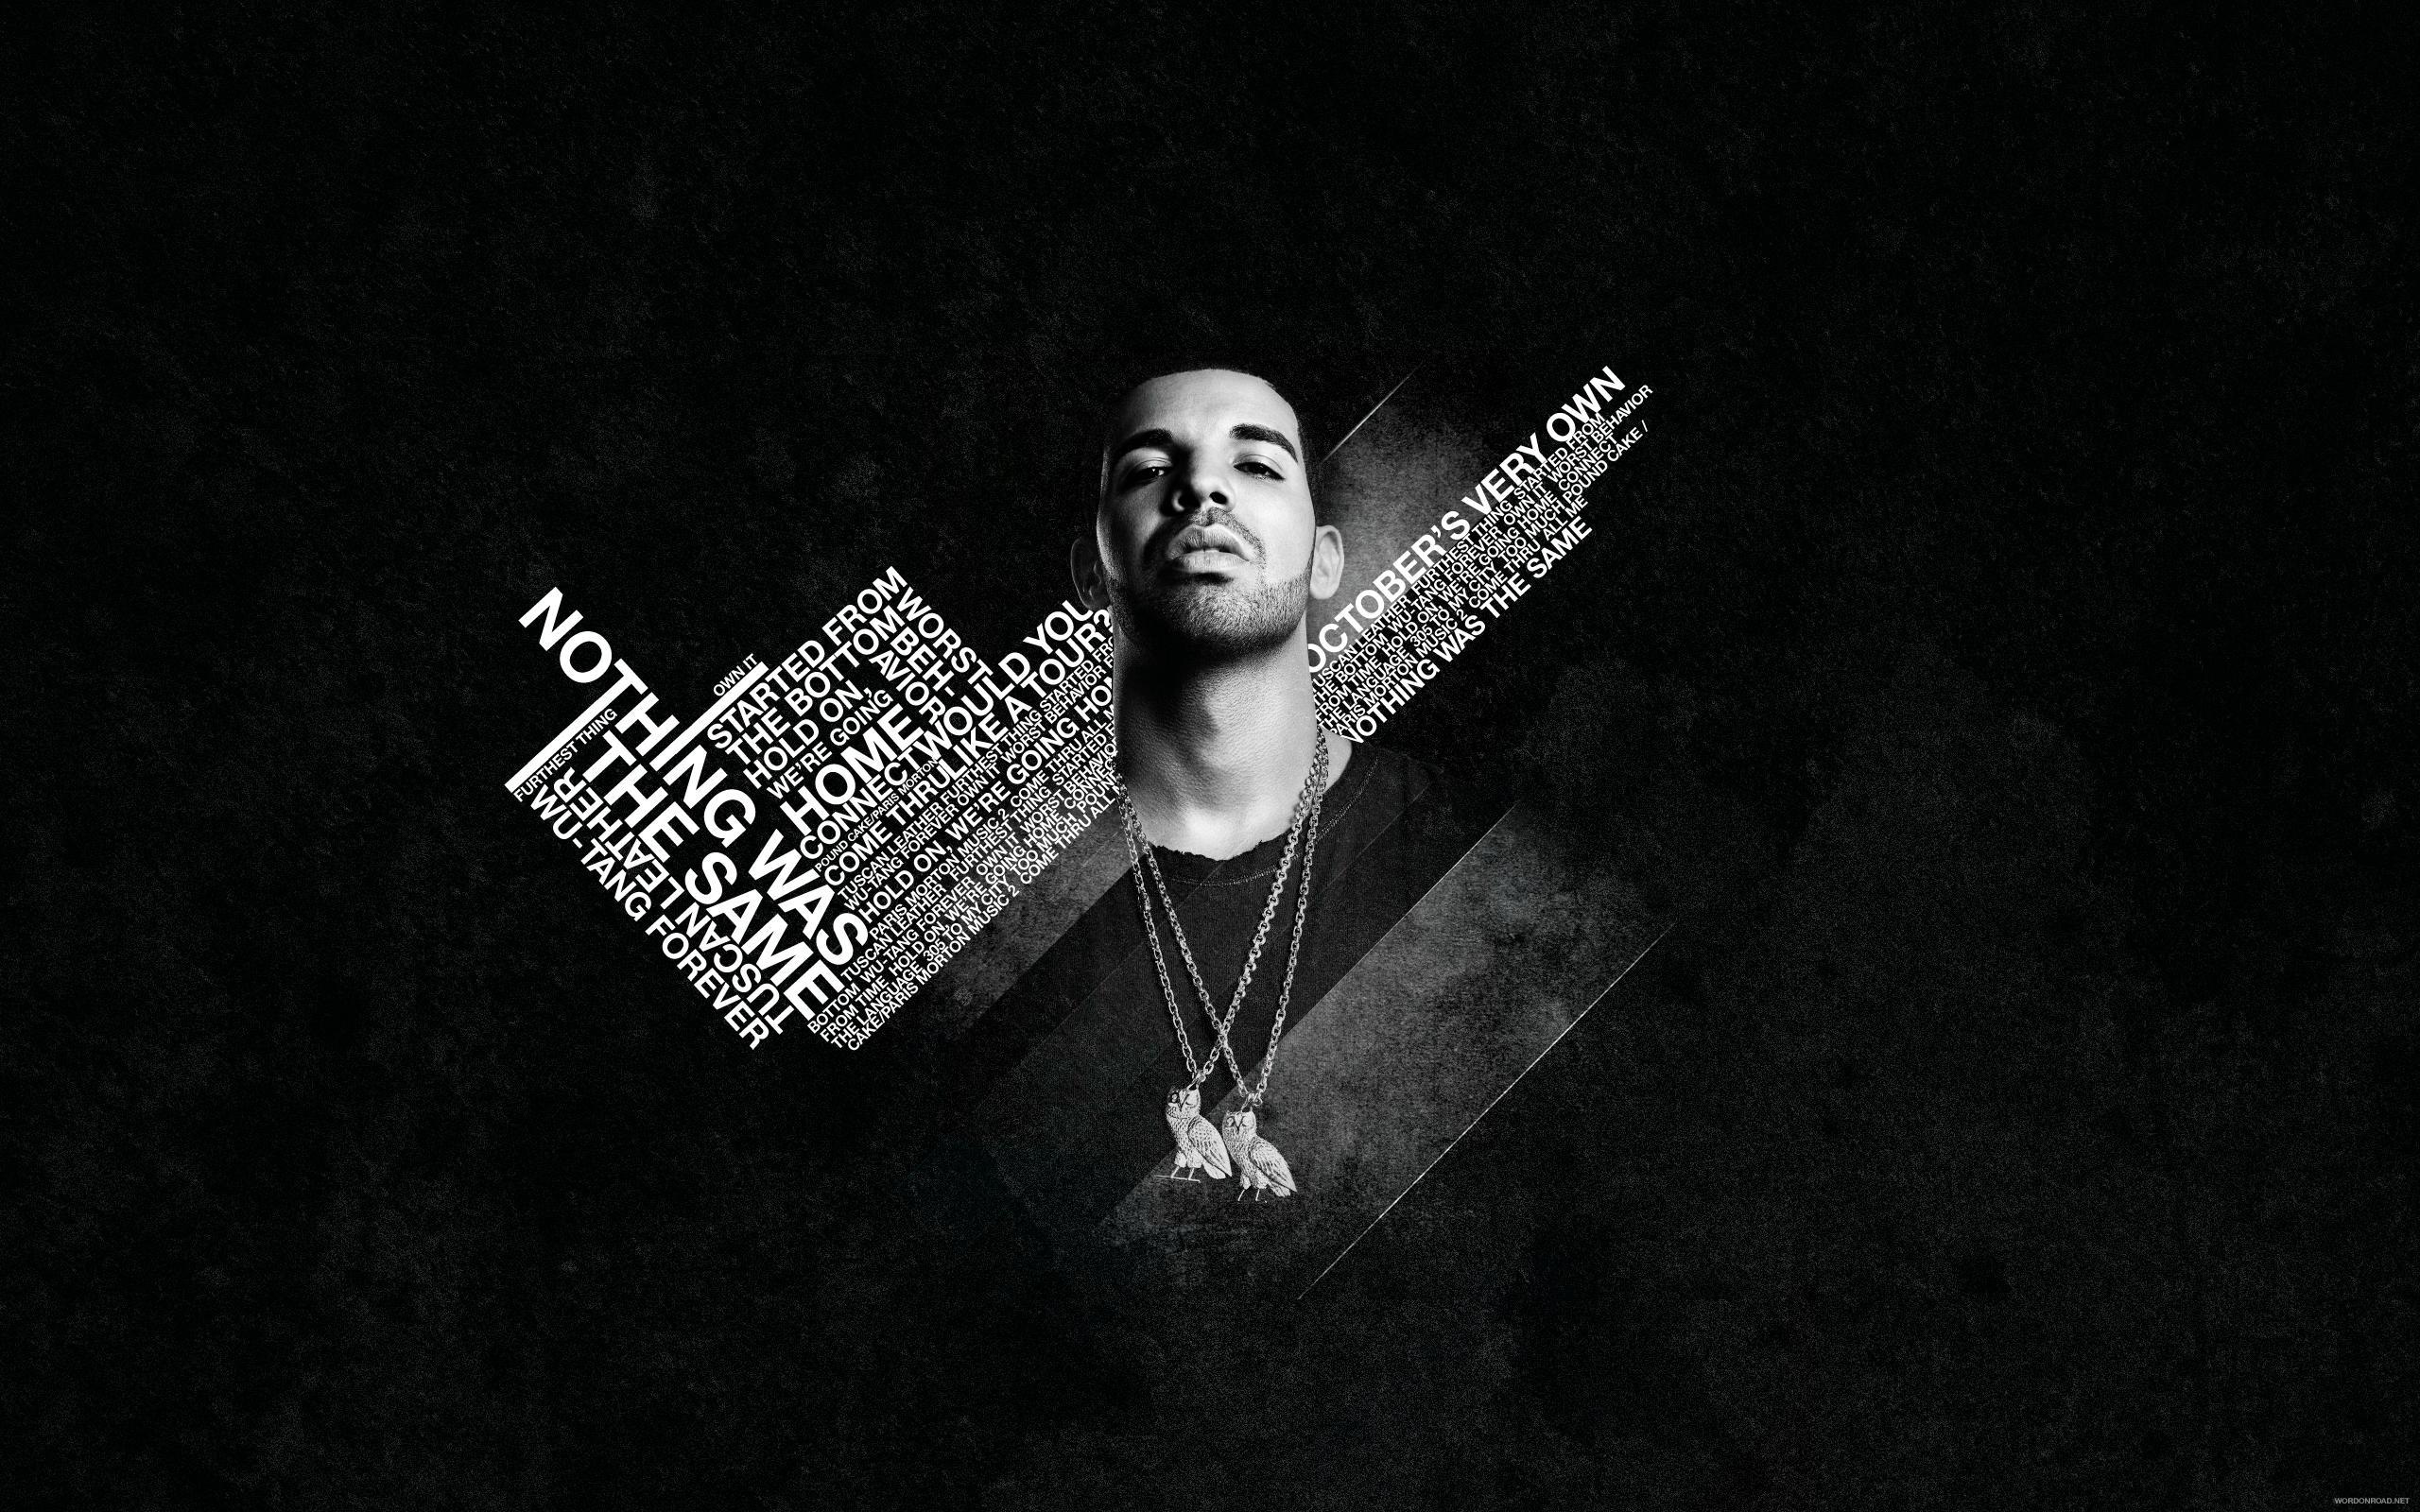 Drake Backgrounds